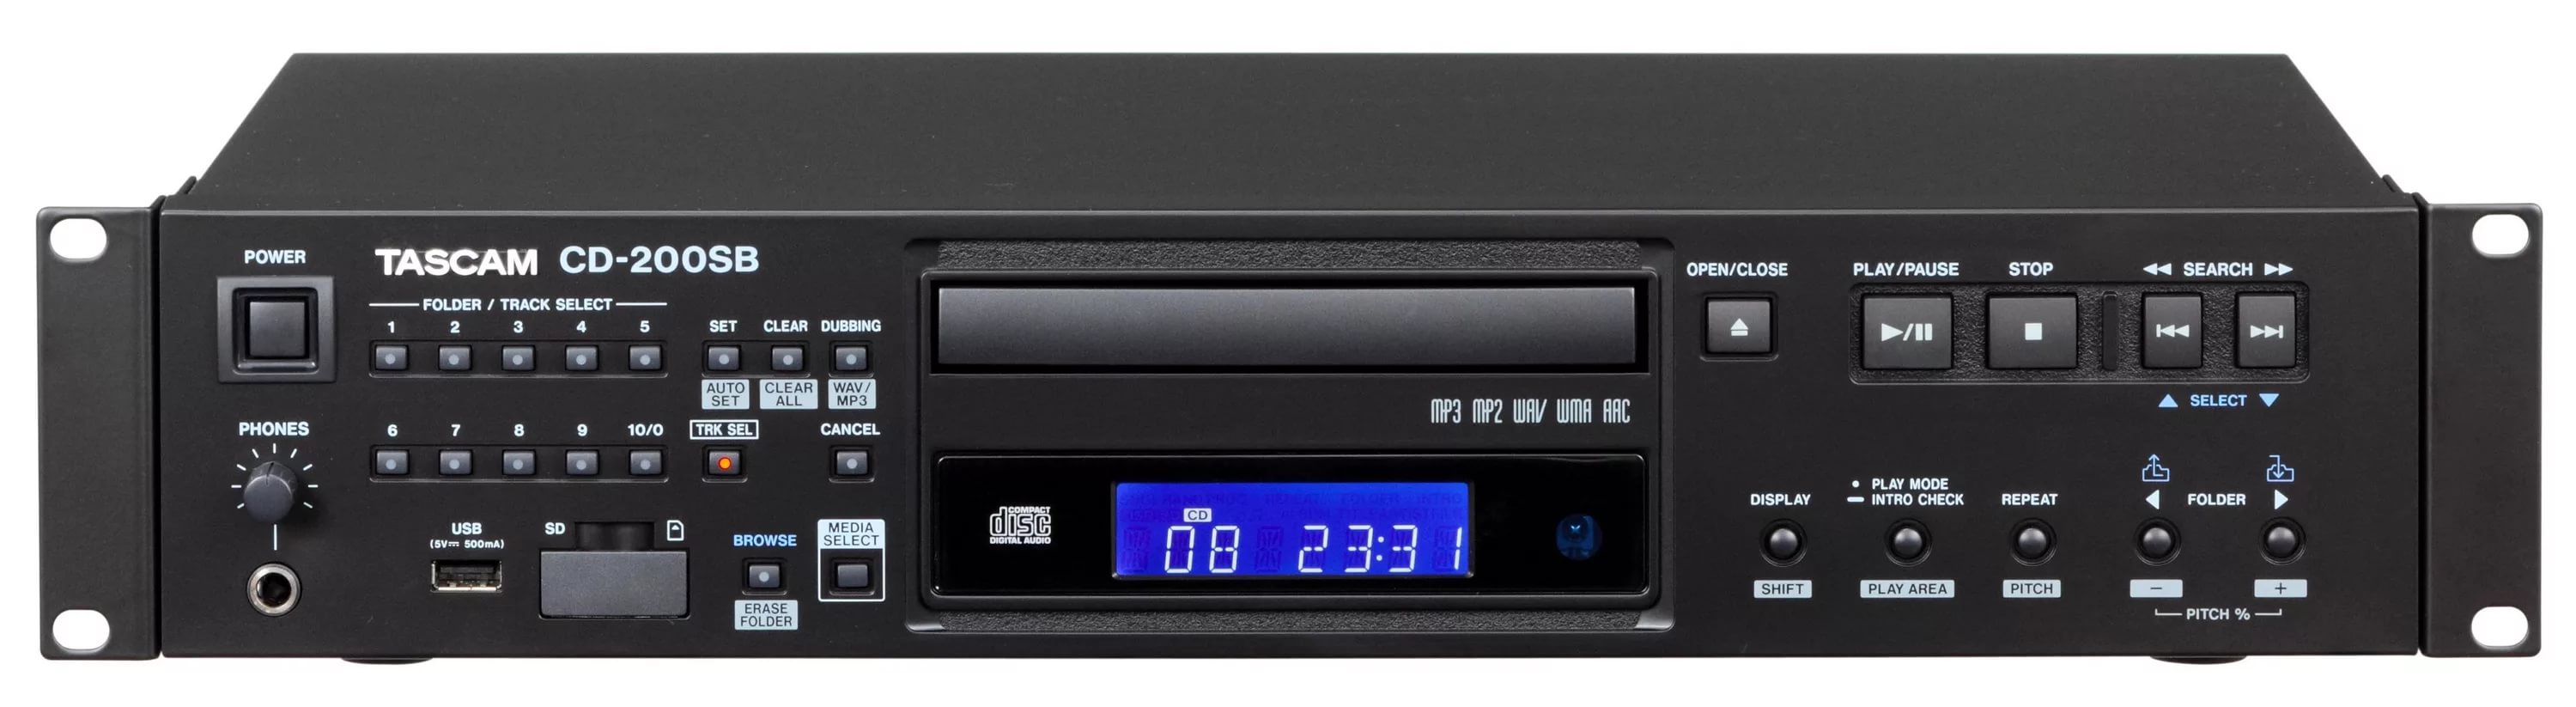 TASCAM CD-200SB, CD-плеер (2U CD/SD/USB), выходы XLR